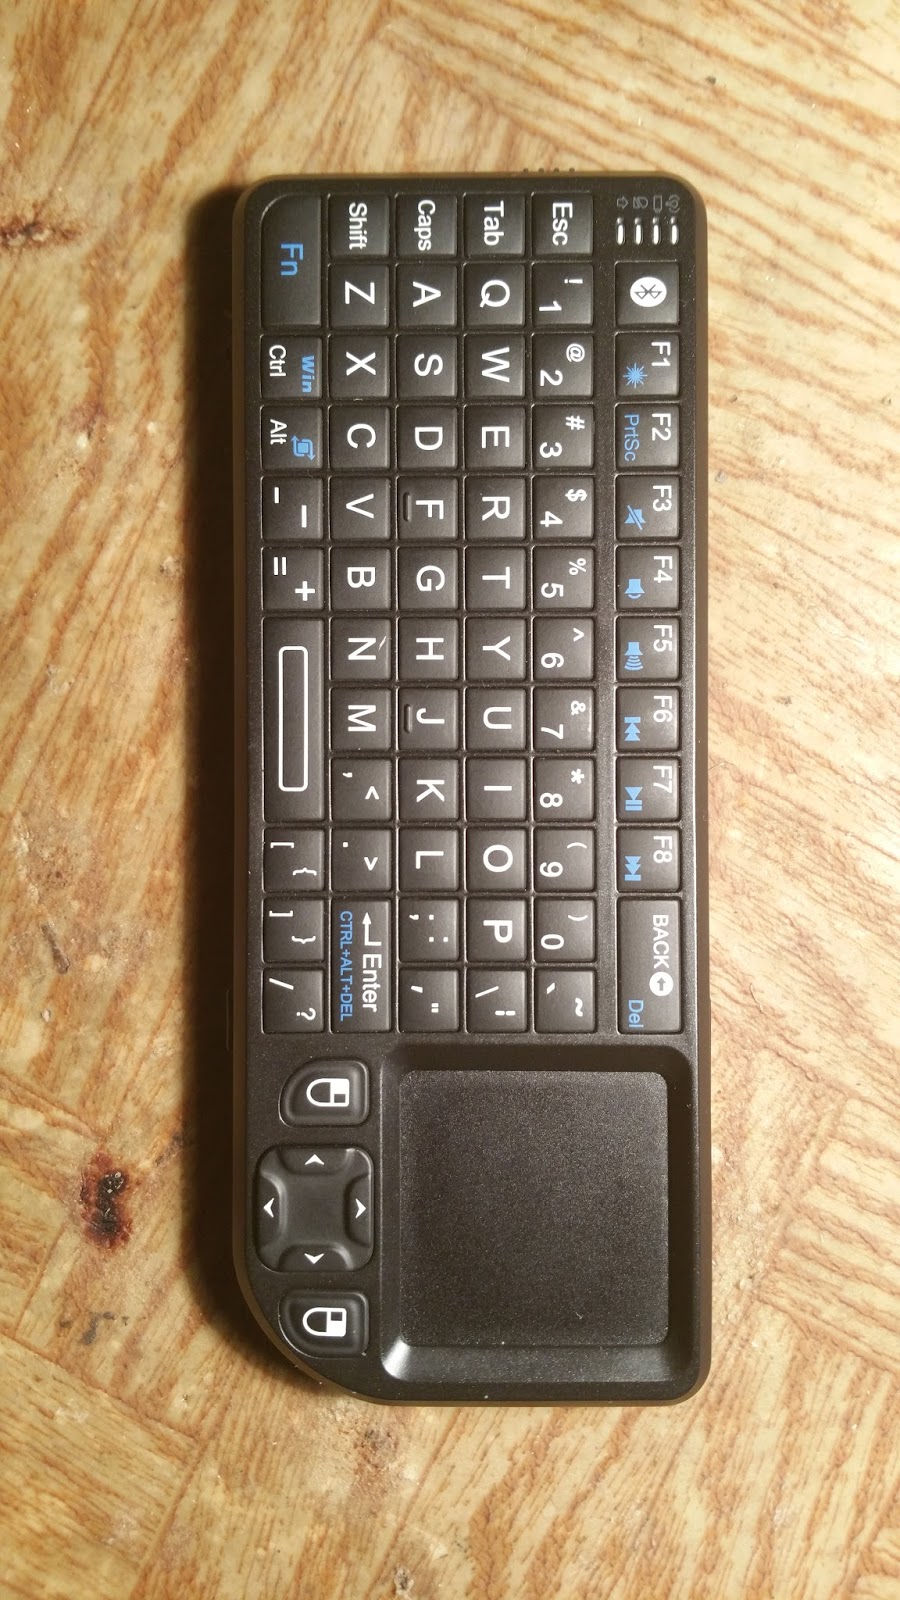 Galaxy note 4 keyboard